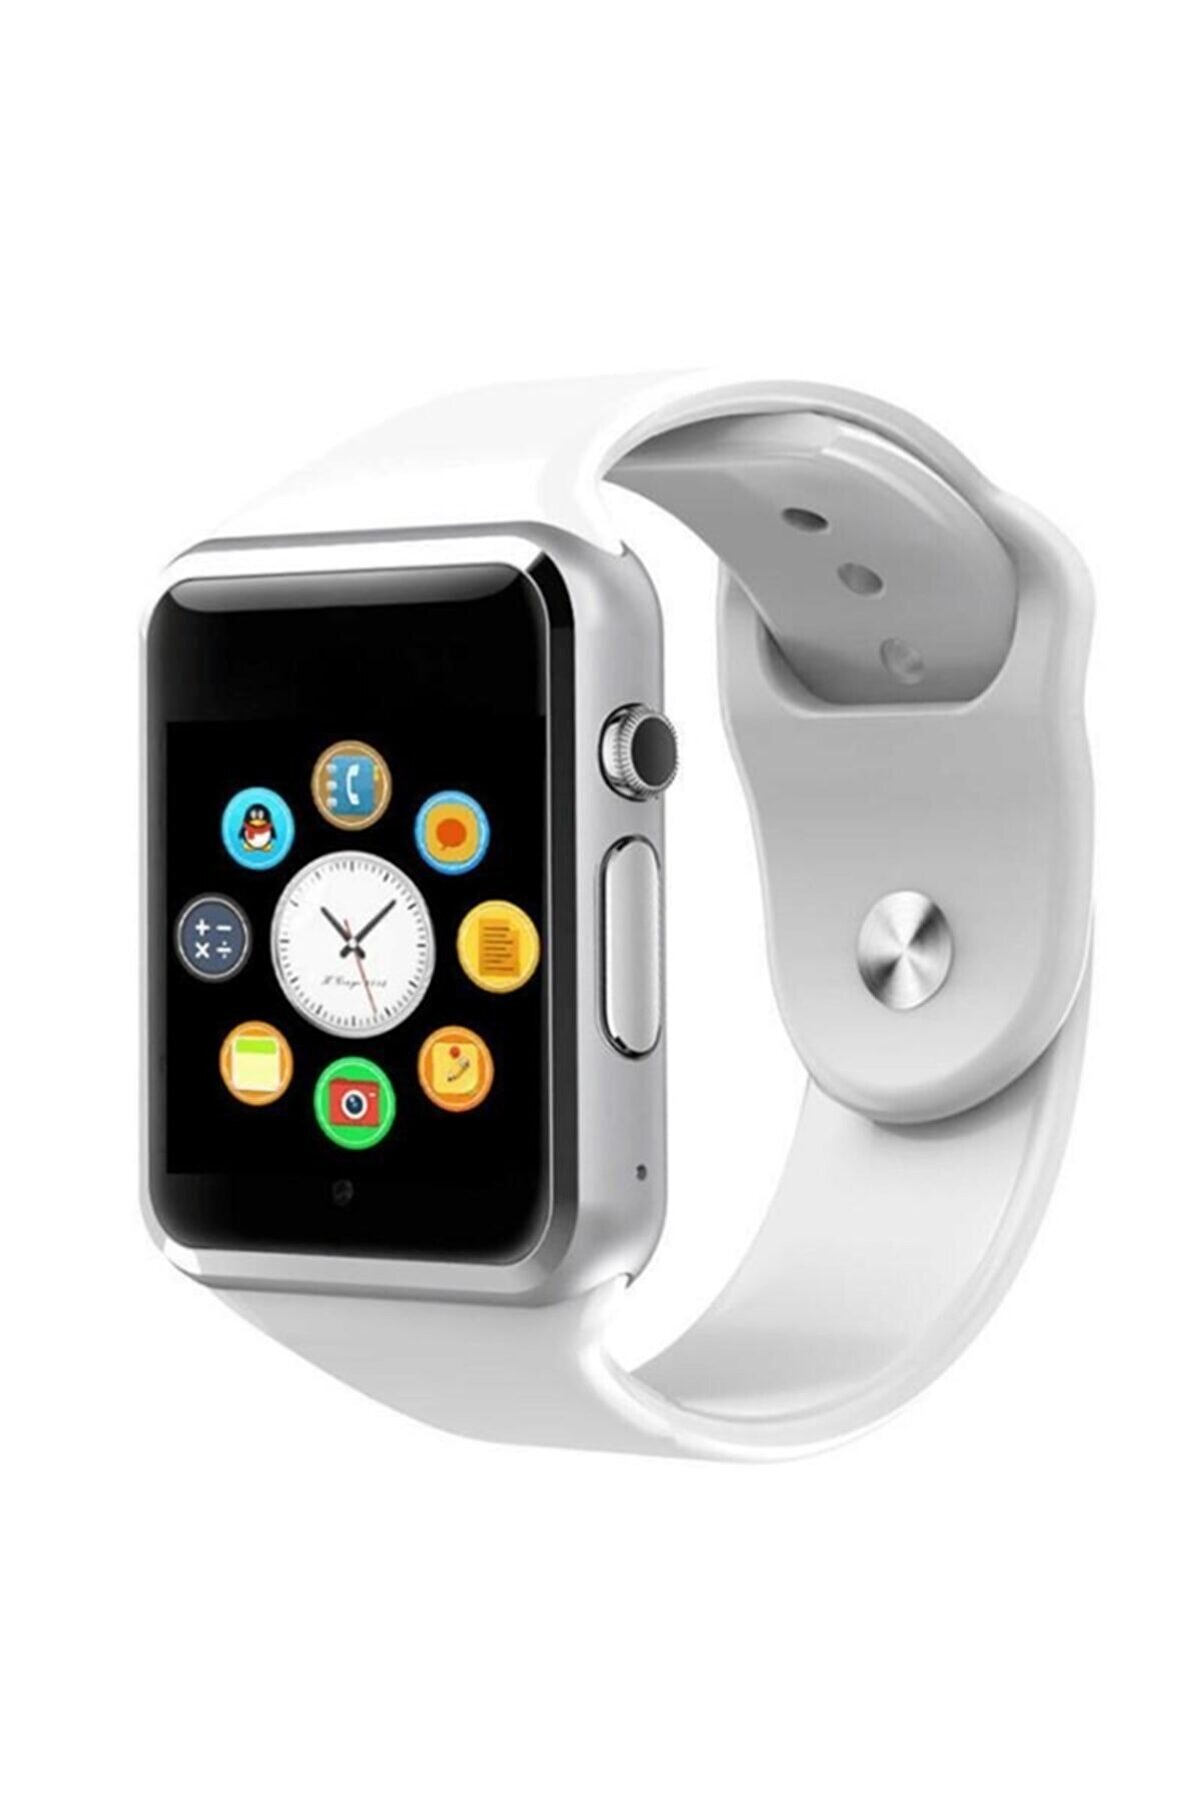 SmartBee Sim Kartlı Akıllı Saat Smart Watch Kameralı Btk Kayıt!